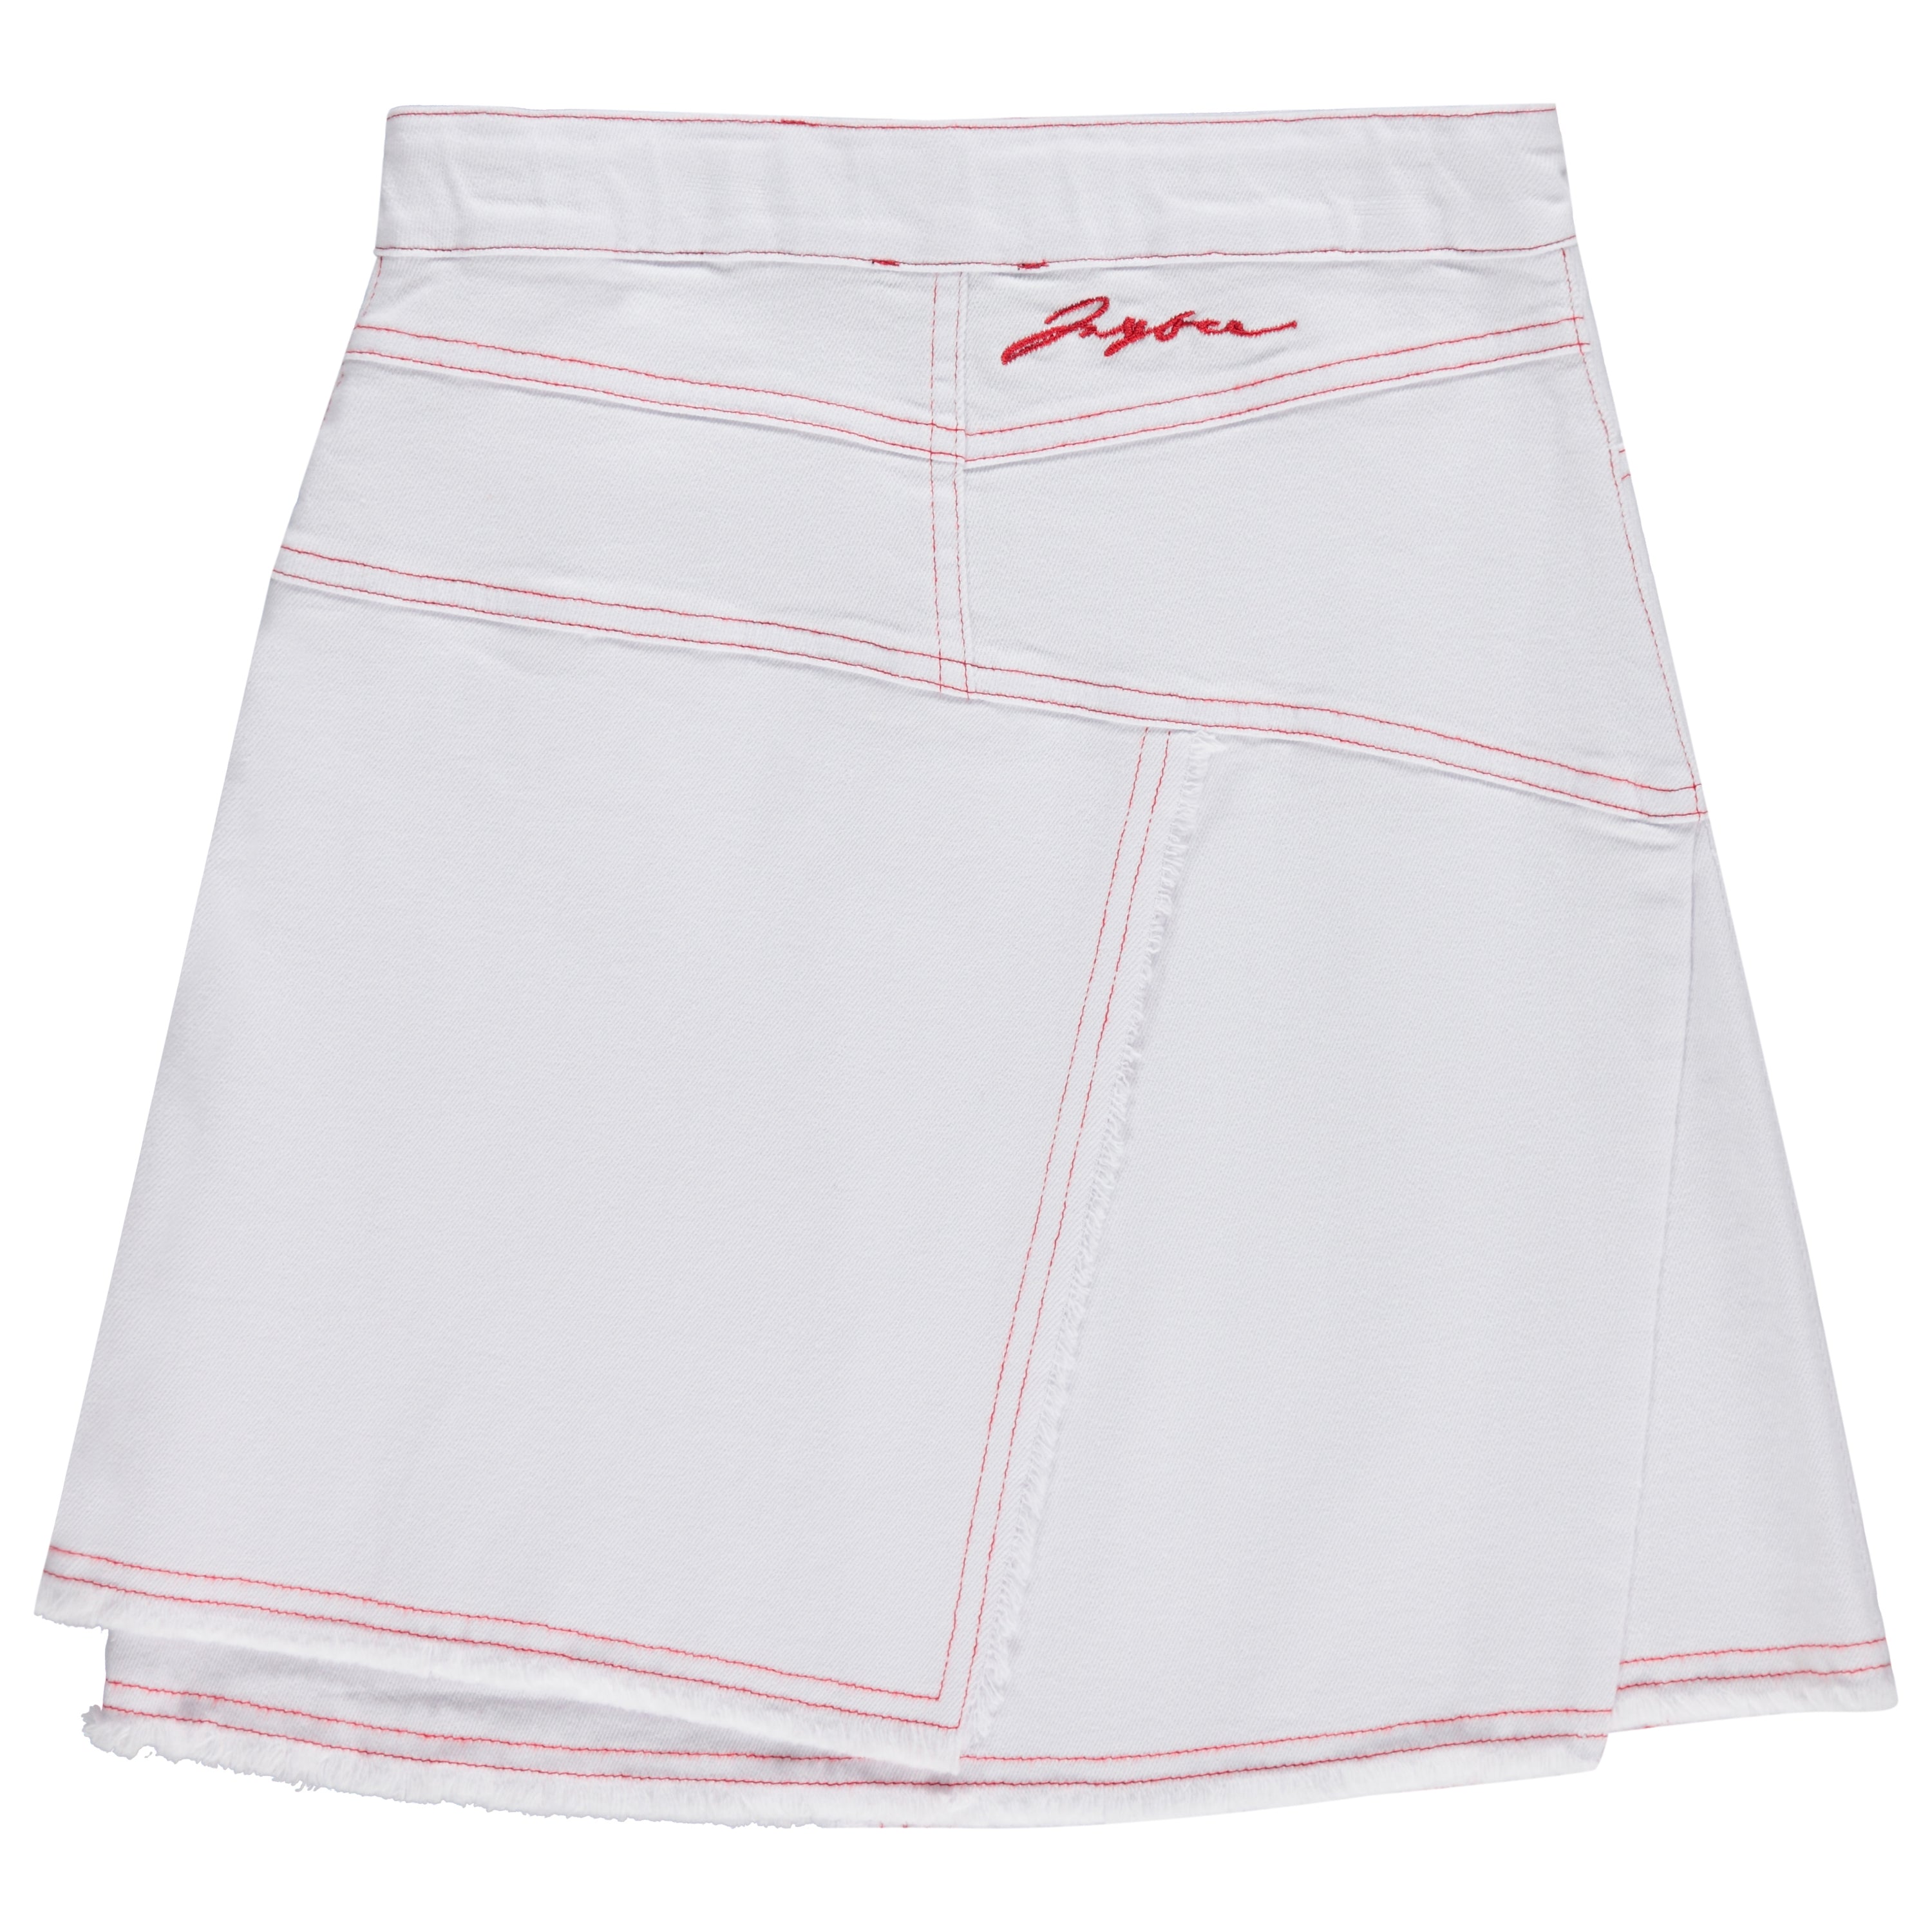 Jaybee Stitched Denim Skirt